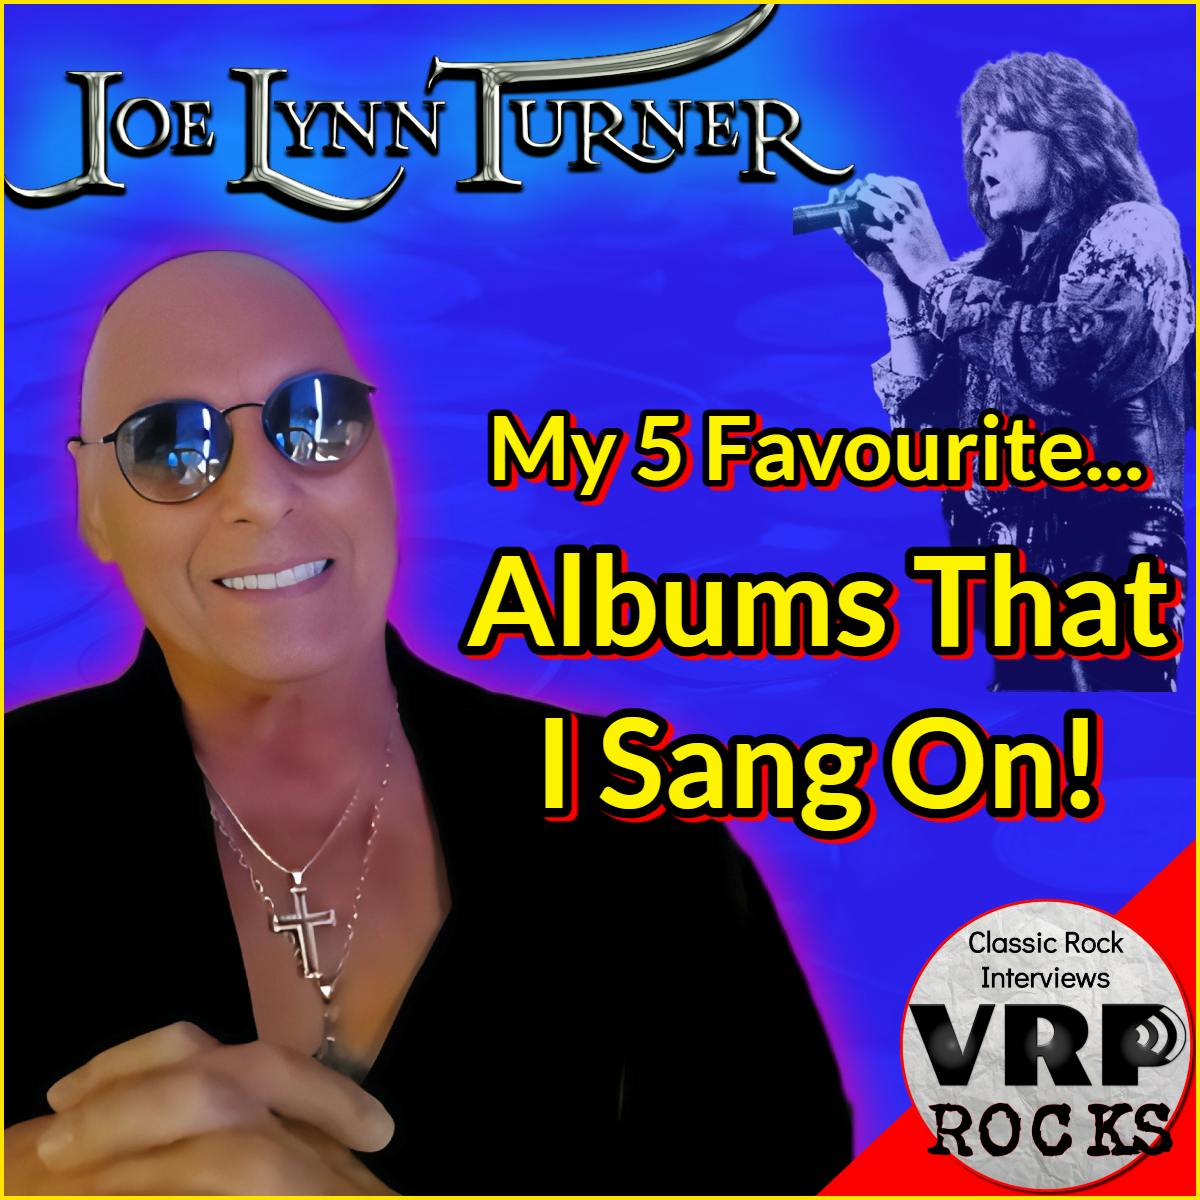 Joe Lynn Turner - My 5 Favourite...